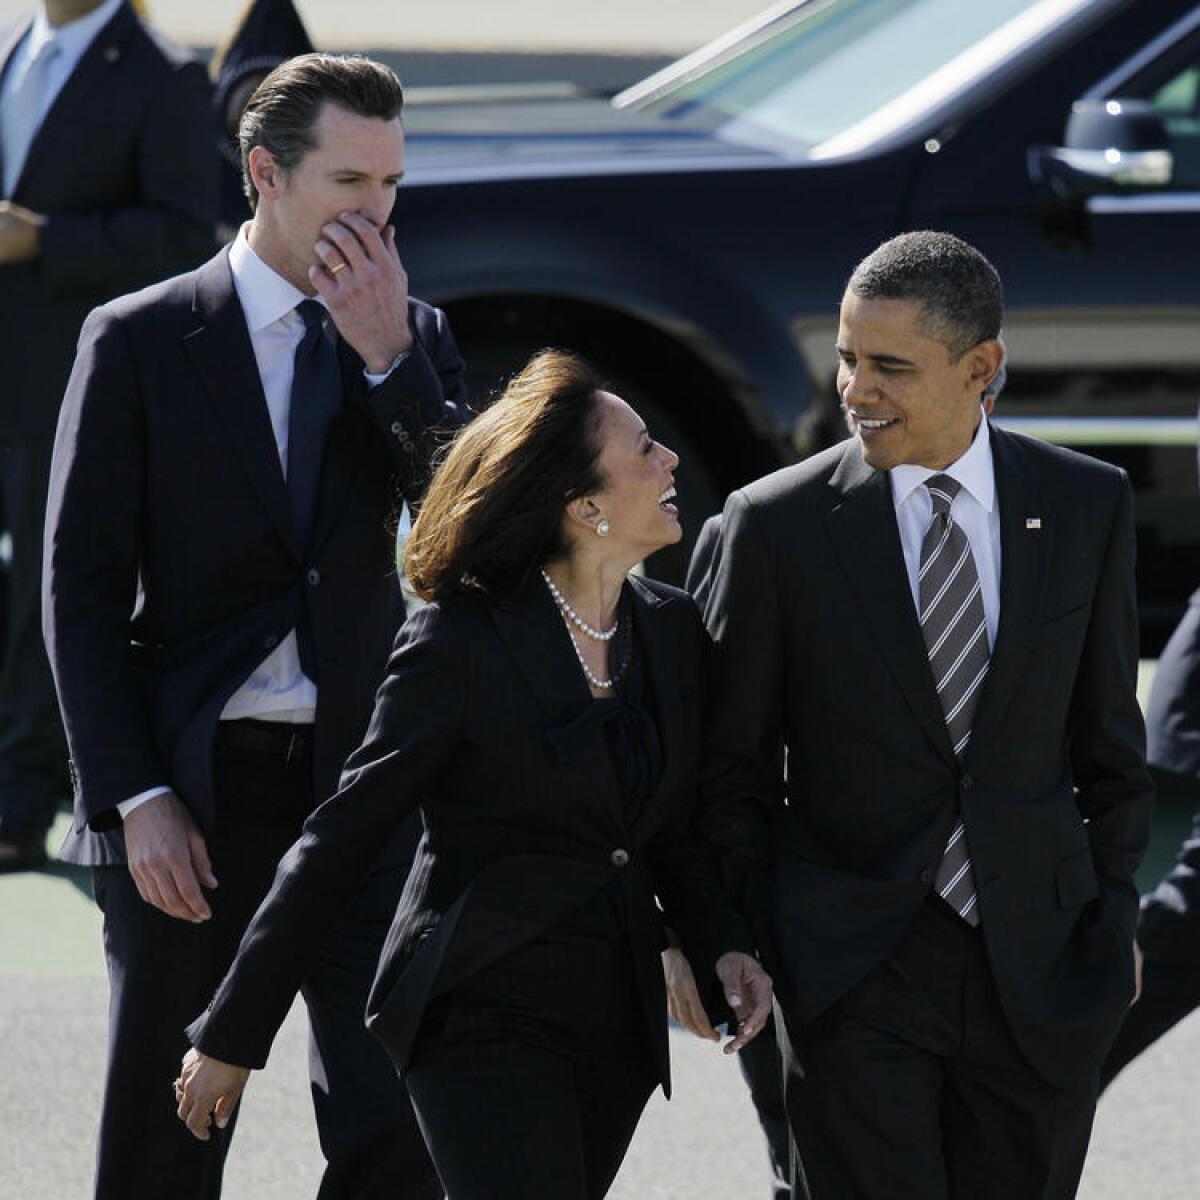 President Barack Obama walks with California Attorney General Kamala Harris, center, and California Lt. Gov. Gavin Newsom, after arriving at San Francisco International Airport in San Francisco in 2012.